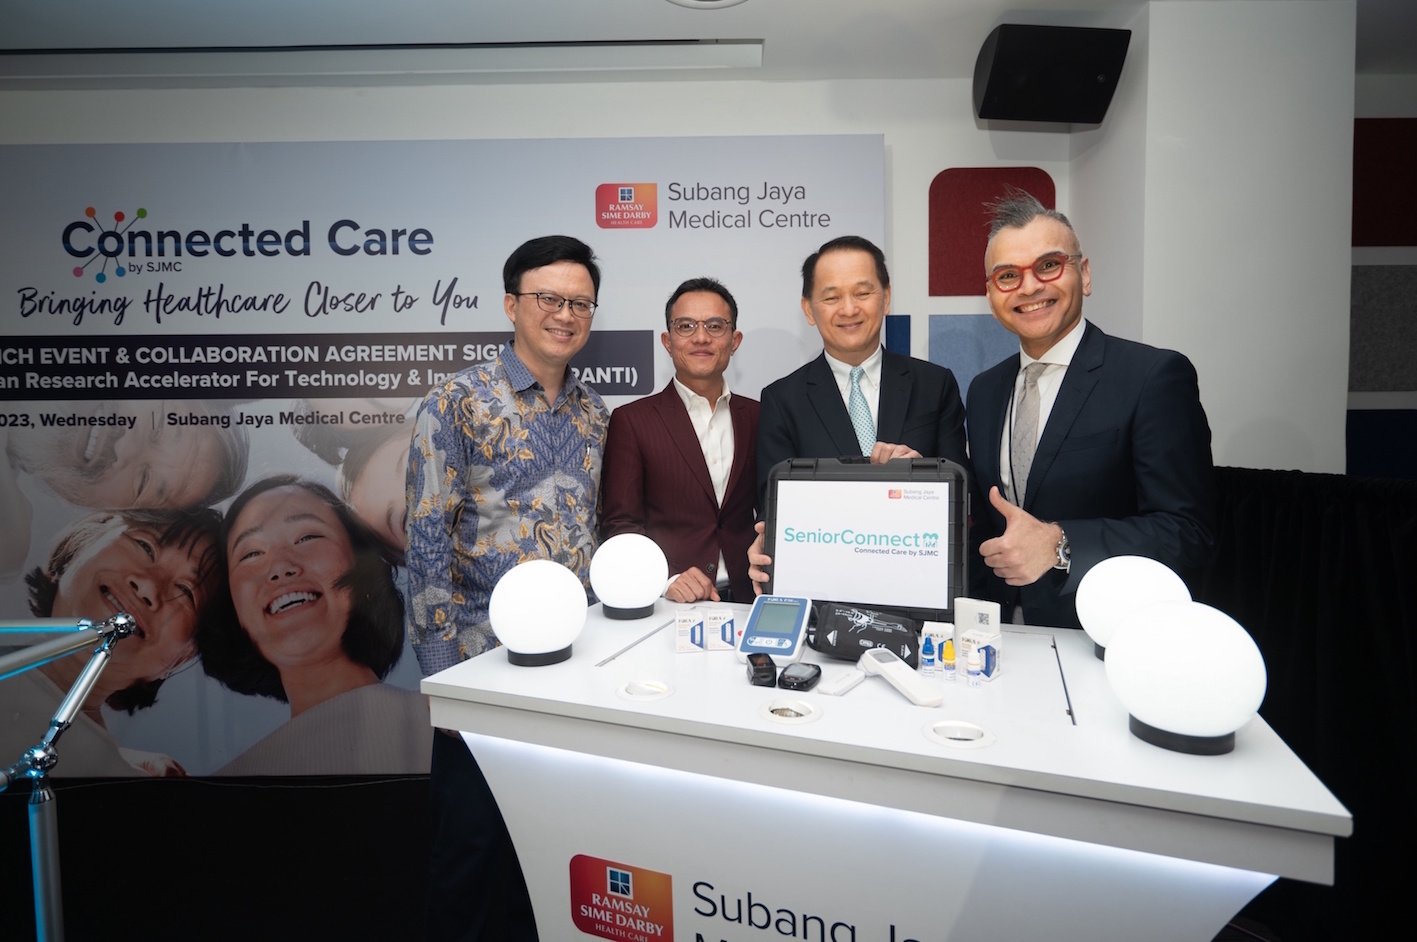 SJMC Introduces Connected Care For Remote Patient Services